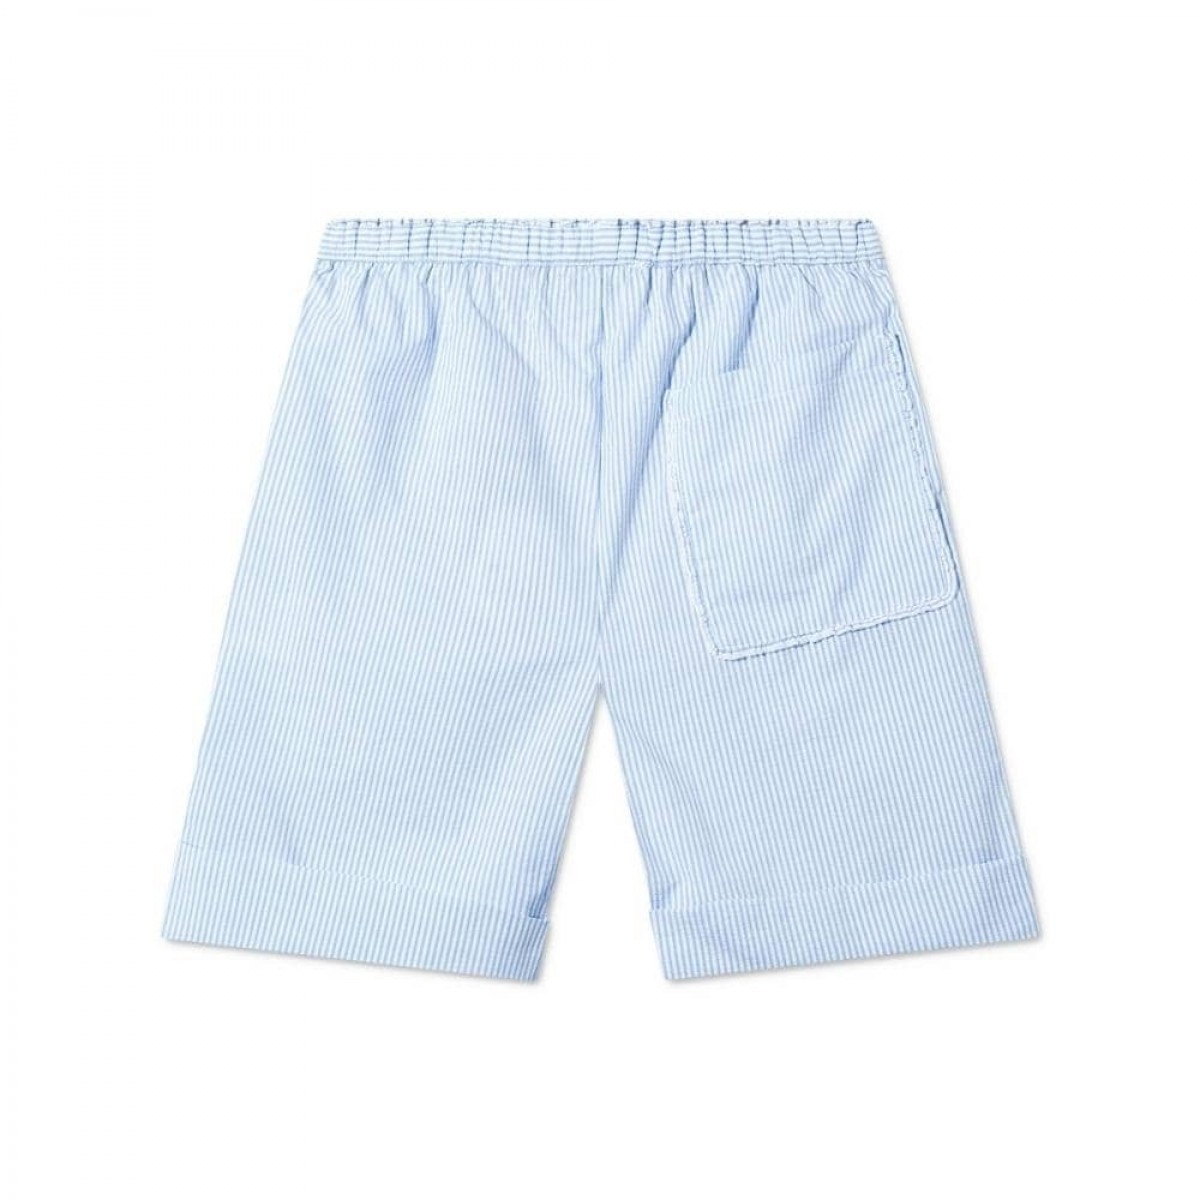 panola shorts - light blue / white stripe - bag